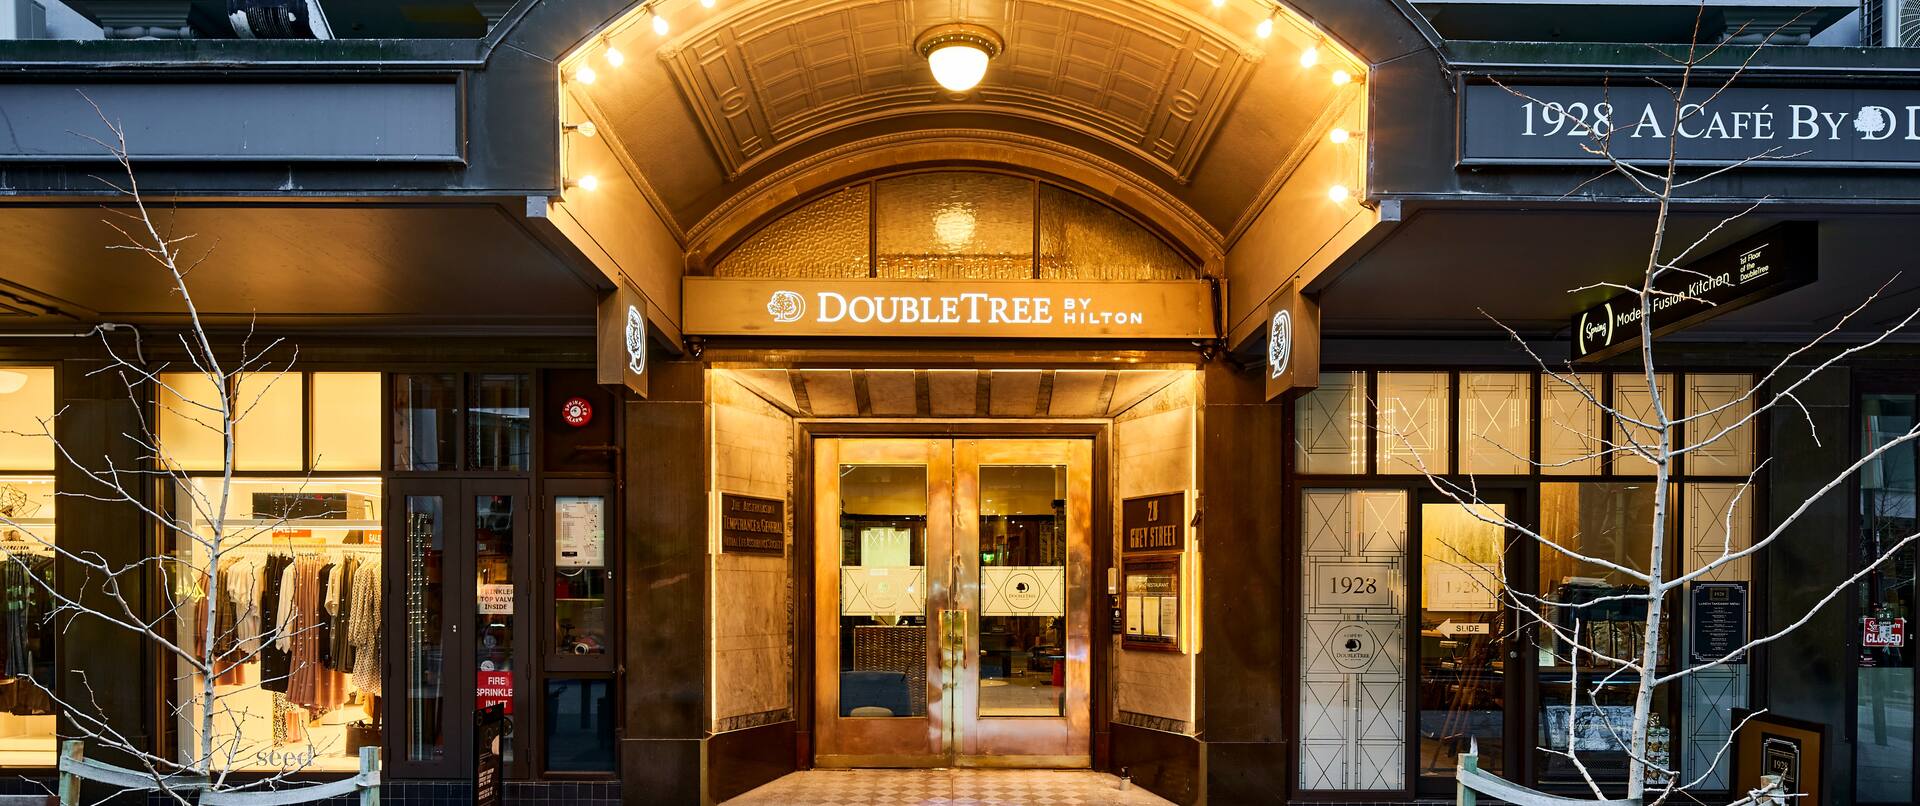 A DoubleTree Hotel Exterior Entrance